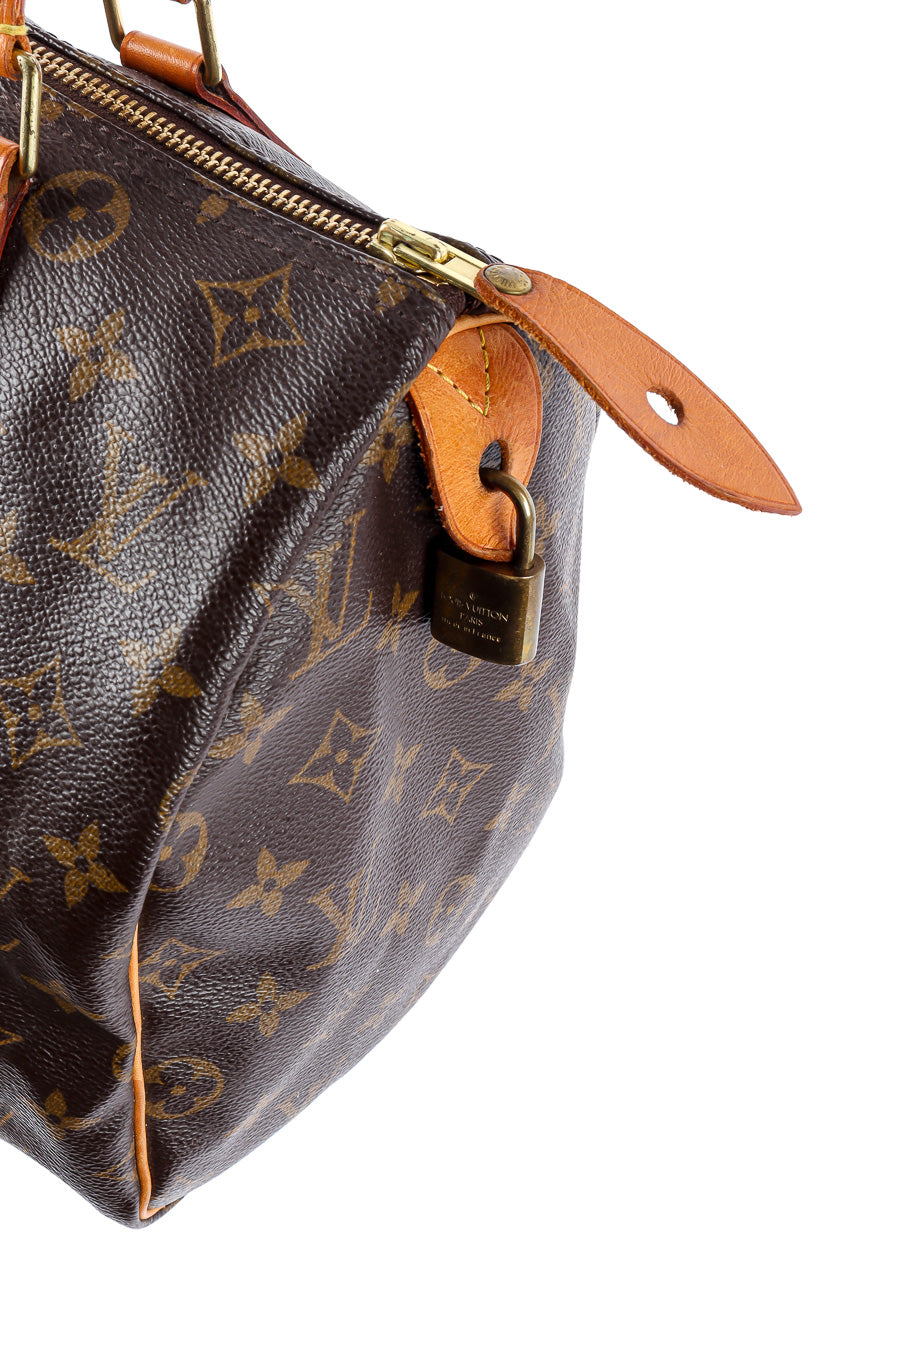 Louis Vuitton classic monogram speedy 30 bag hardware details @recessla